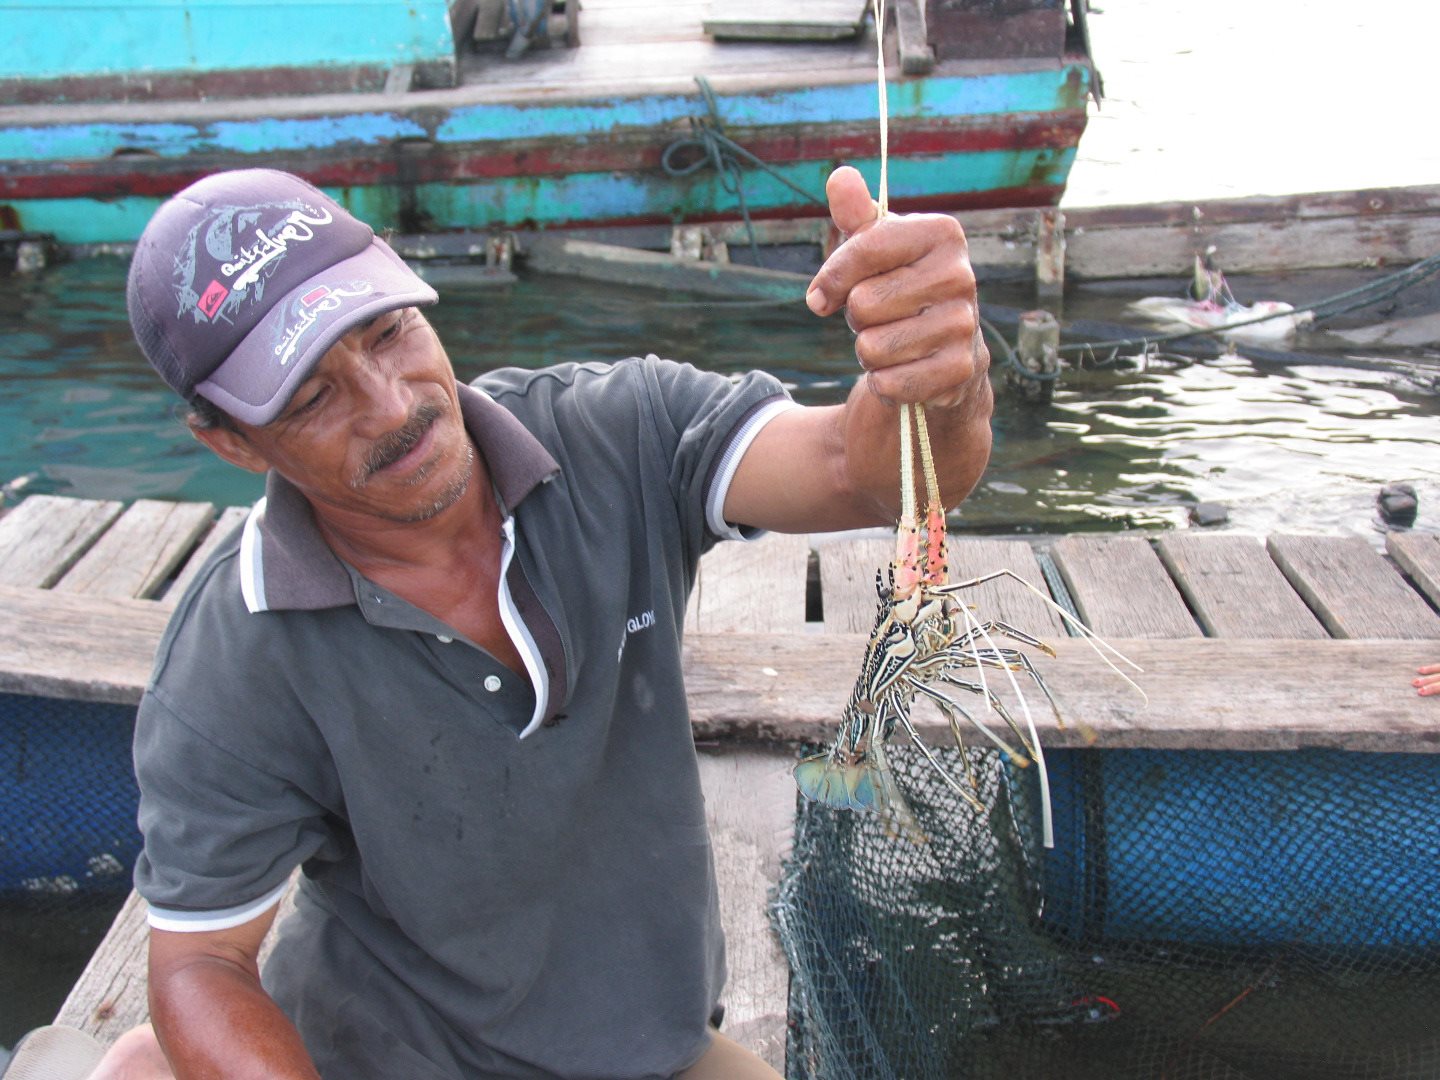 Fisherman holding large fish